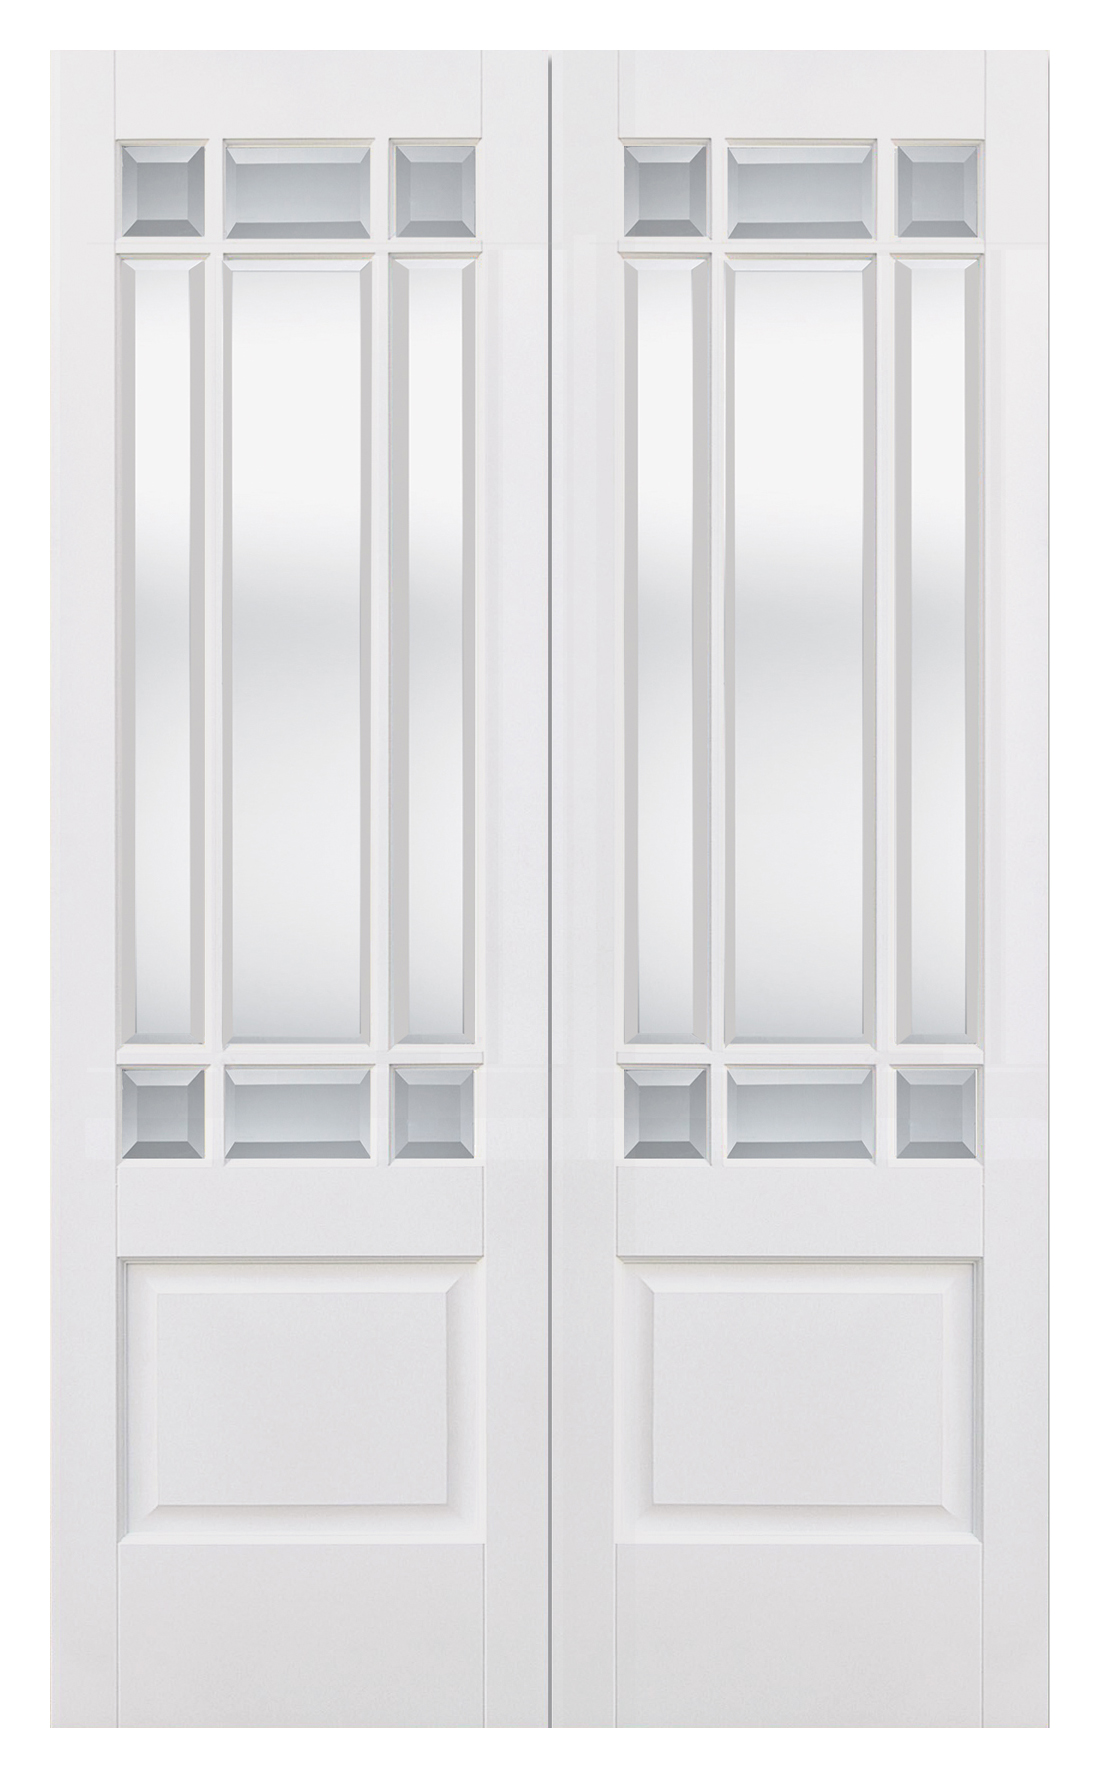 Image of LPD Internal Downham Pair 9 Lite Glazed Primed White Solid Core Door - 1168 x 1981mm